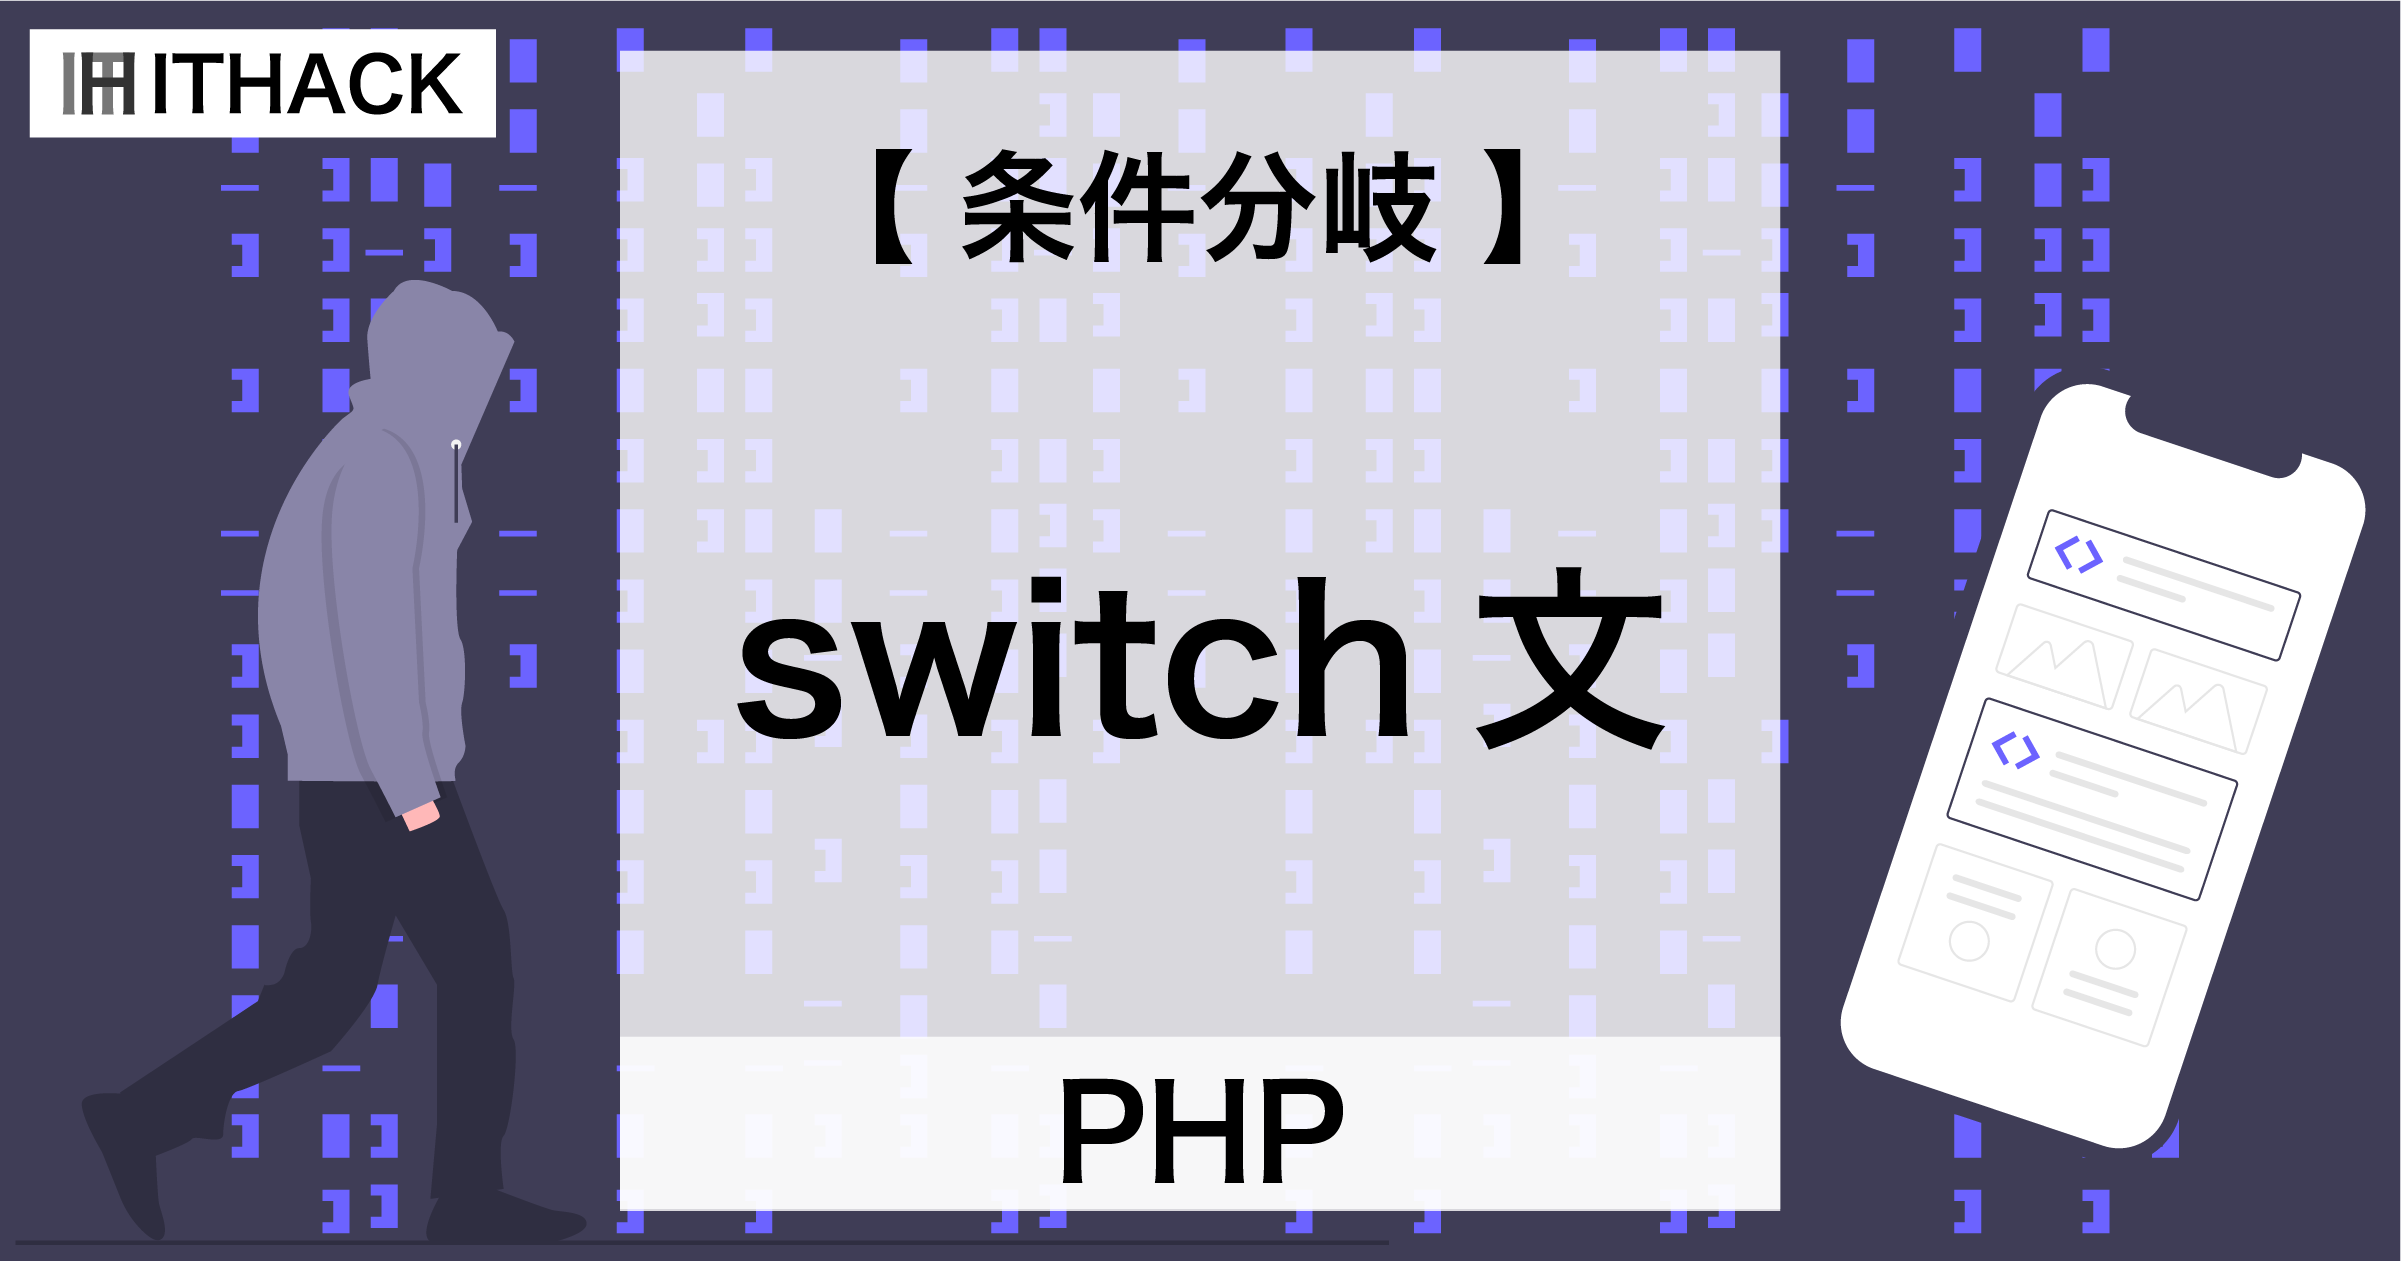 【PHP】switch文 - 条件分岐 / 変数の値による処理の分岐